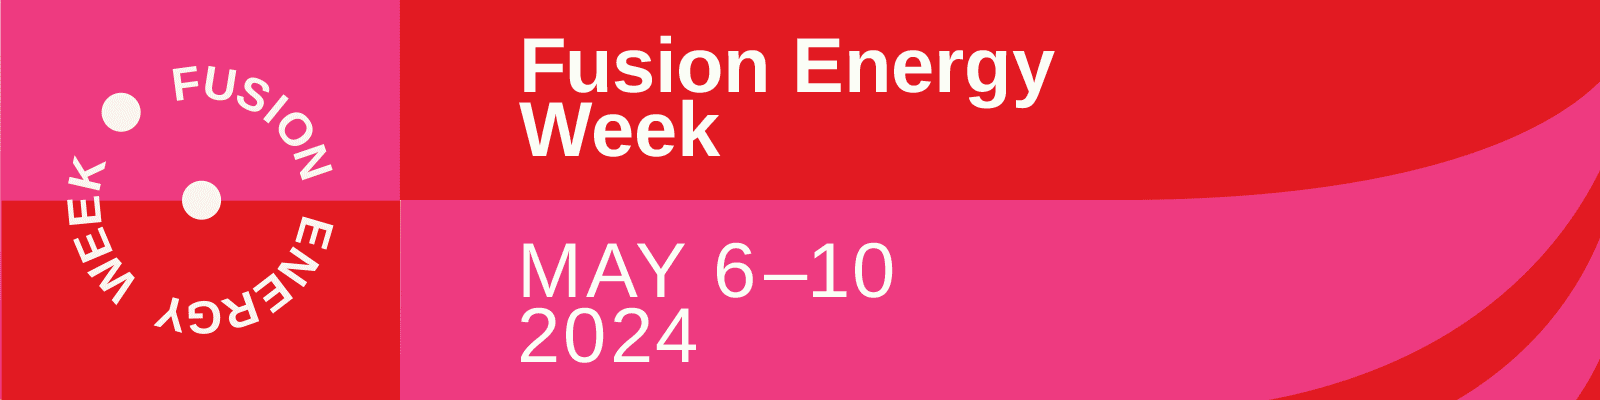 Fusion Energy Week: May 6-10, 2024